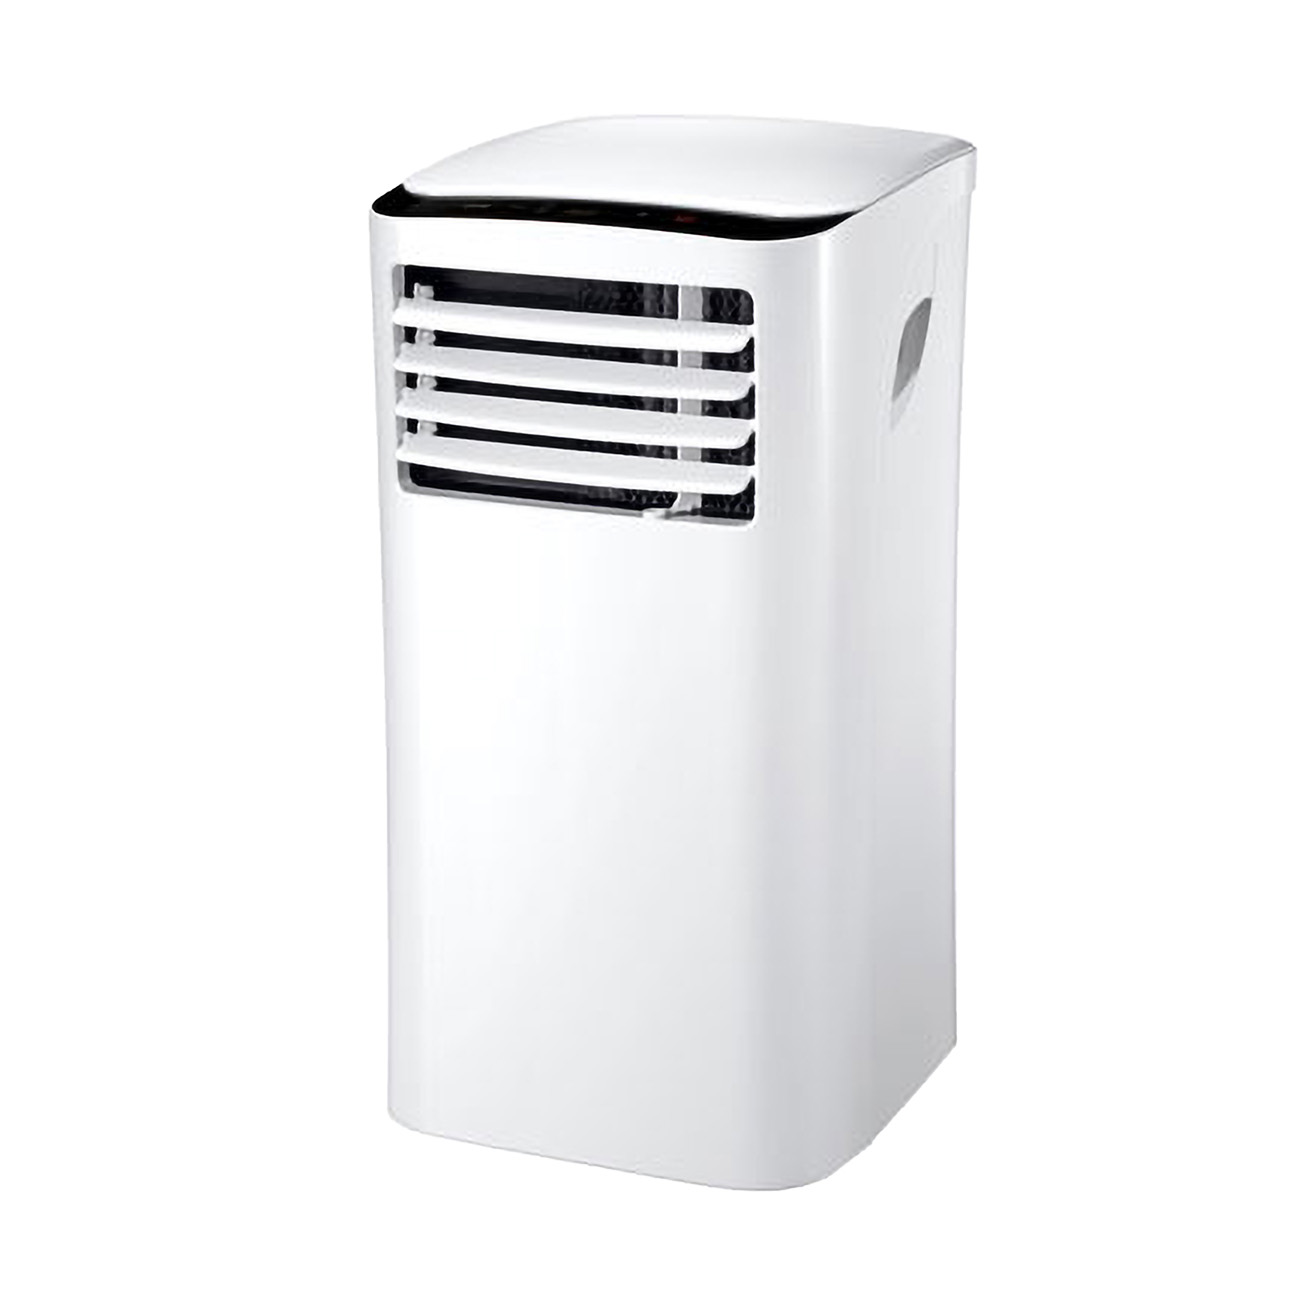 MIDEA Eco Friendly Lite Klimagerät weiß m² A+, 30 Max. Raumgröße: Energieeffizienzklasse